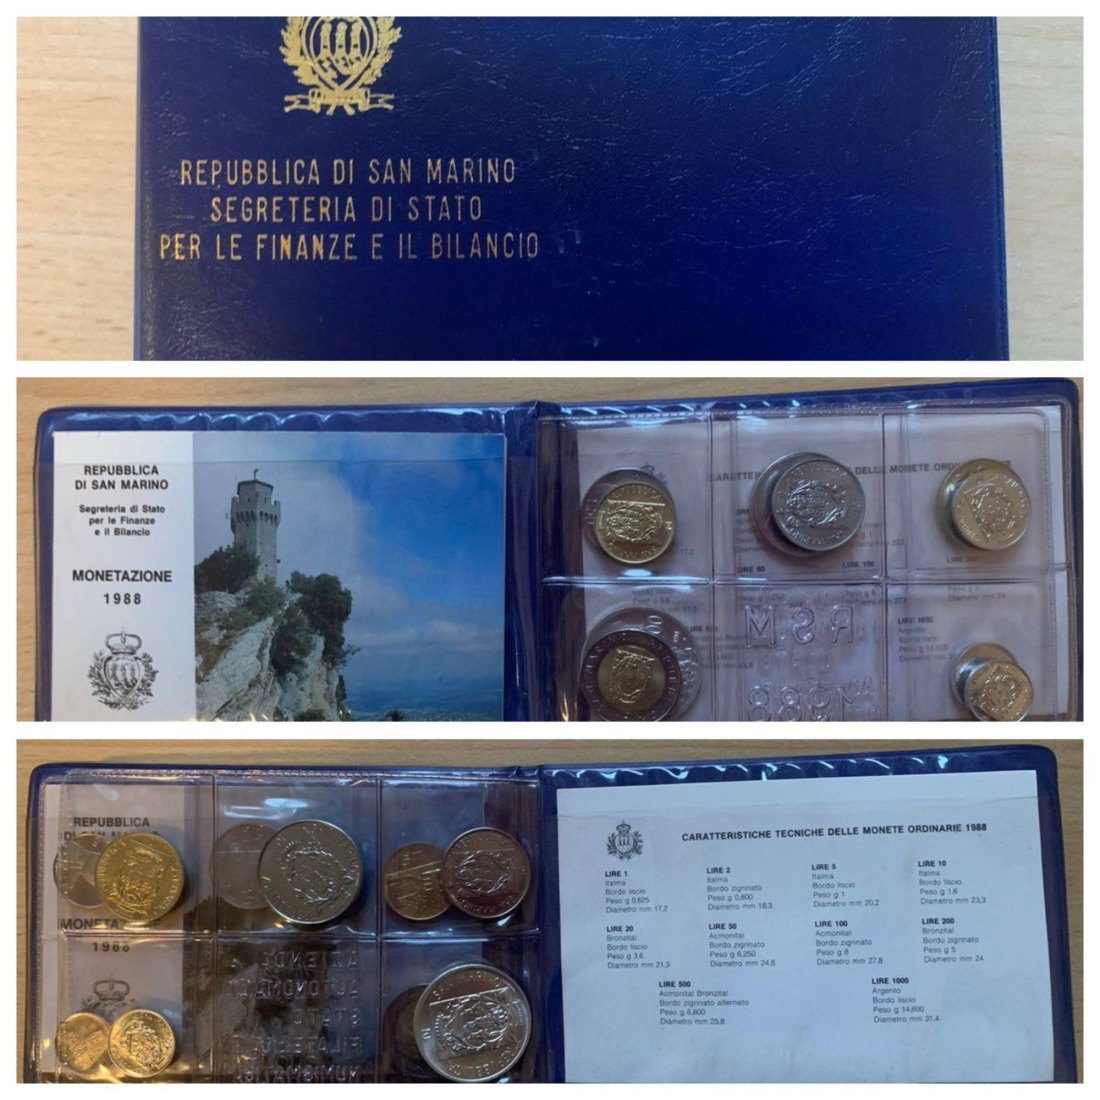  San Marino 1988 Coin set BU (10 coins)   